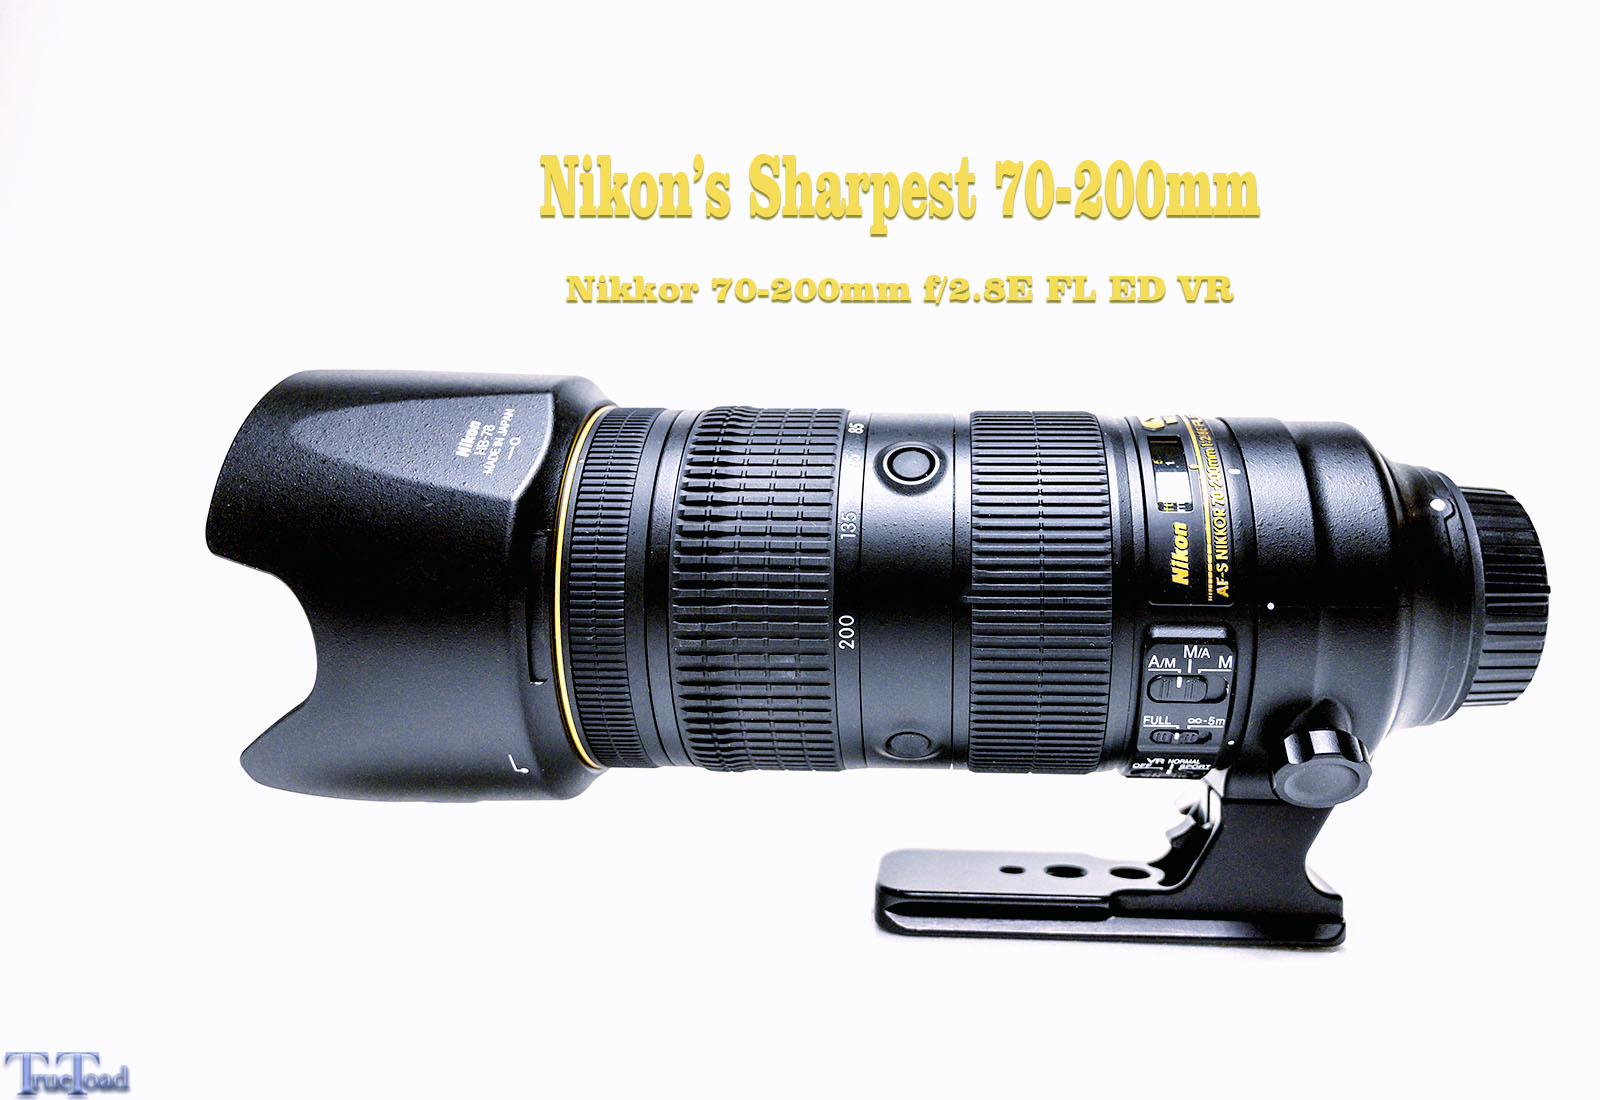 Stemmen Frons Technologie Nikon 70-200mm f/2.8E FL ED VR Lens Review TrueToad Photo